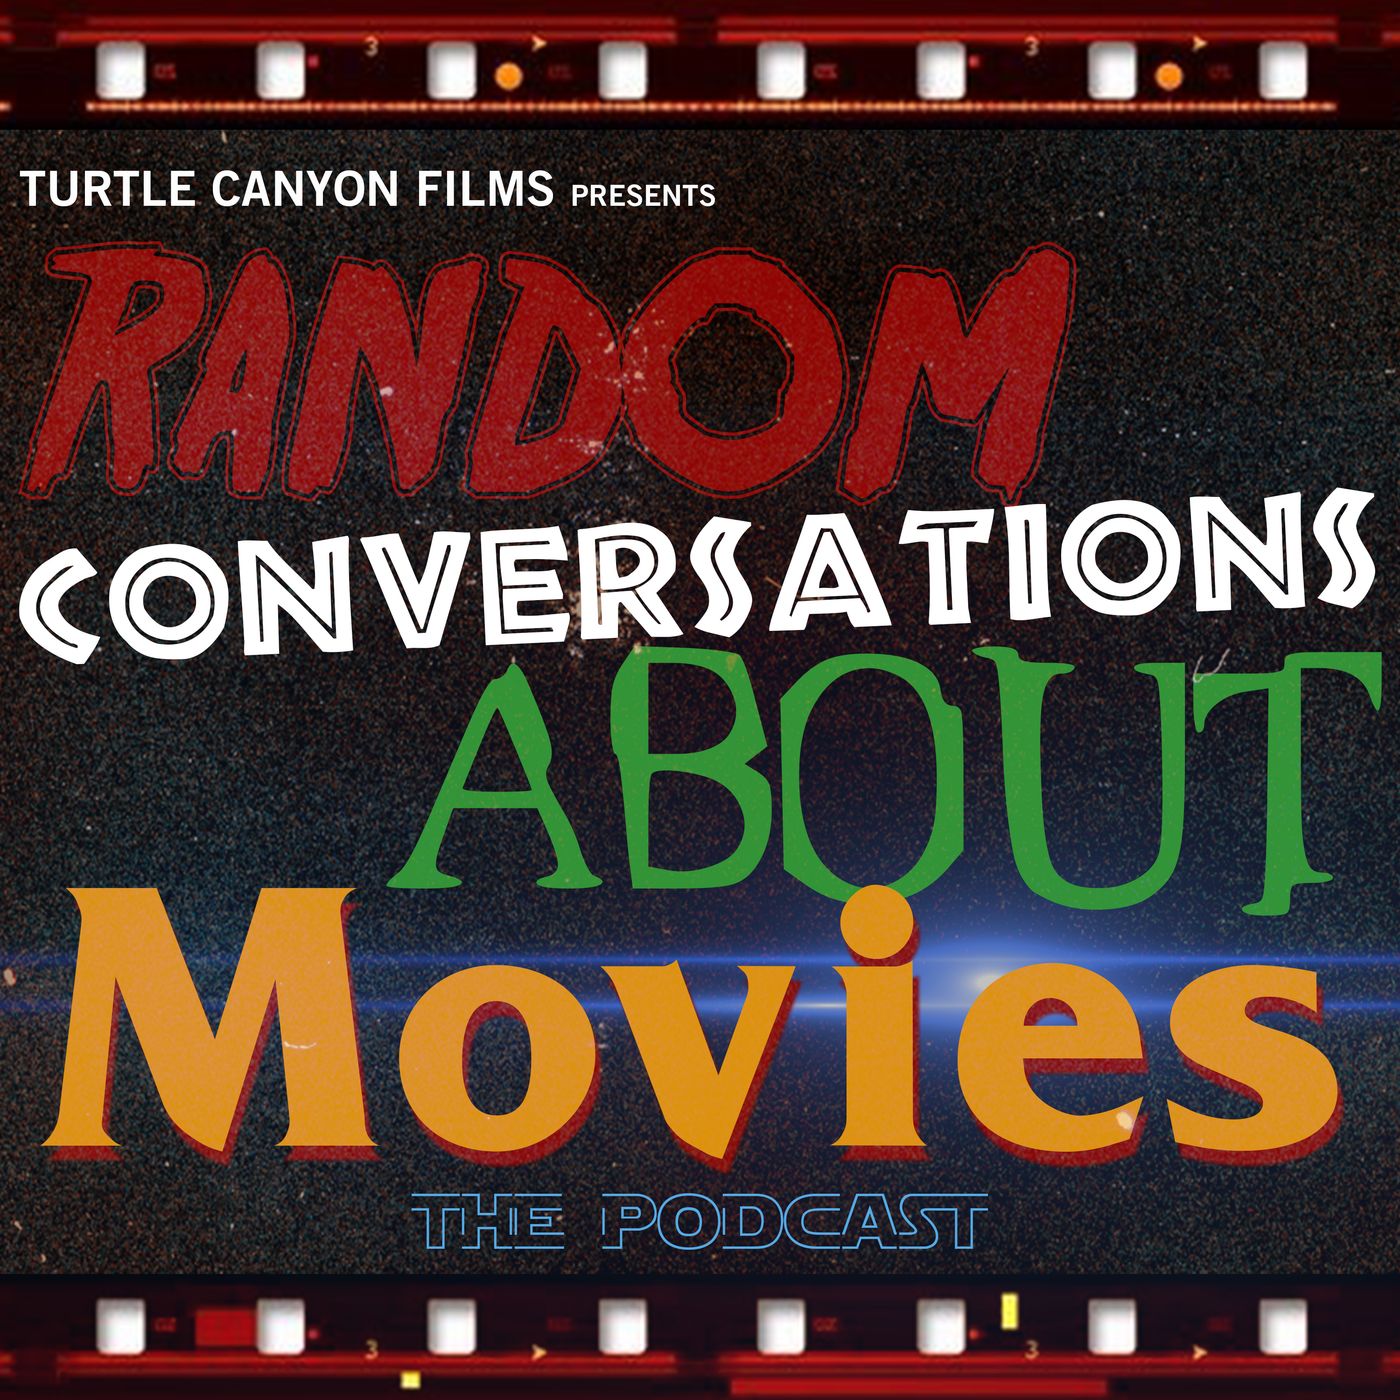 Random Conversations About Movies